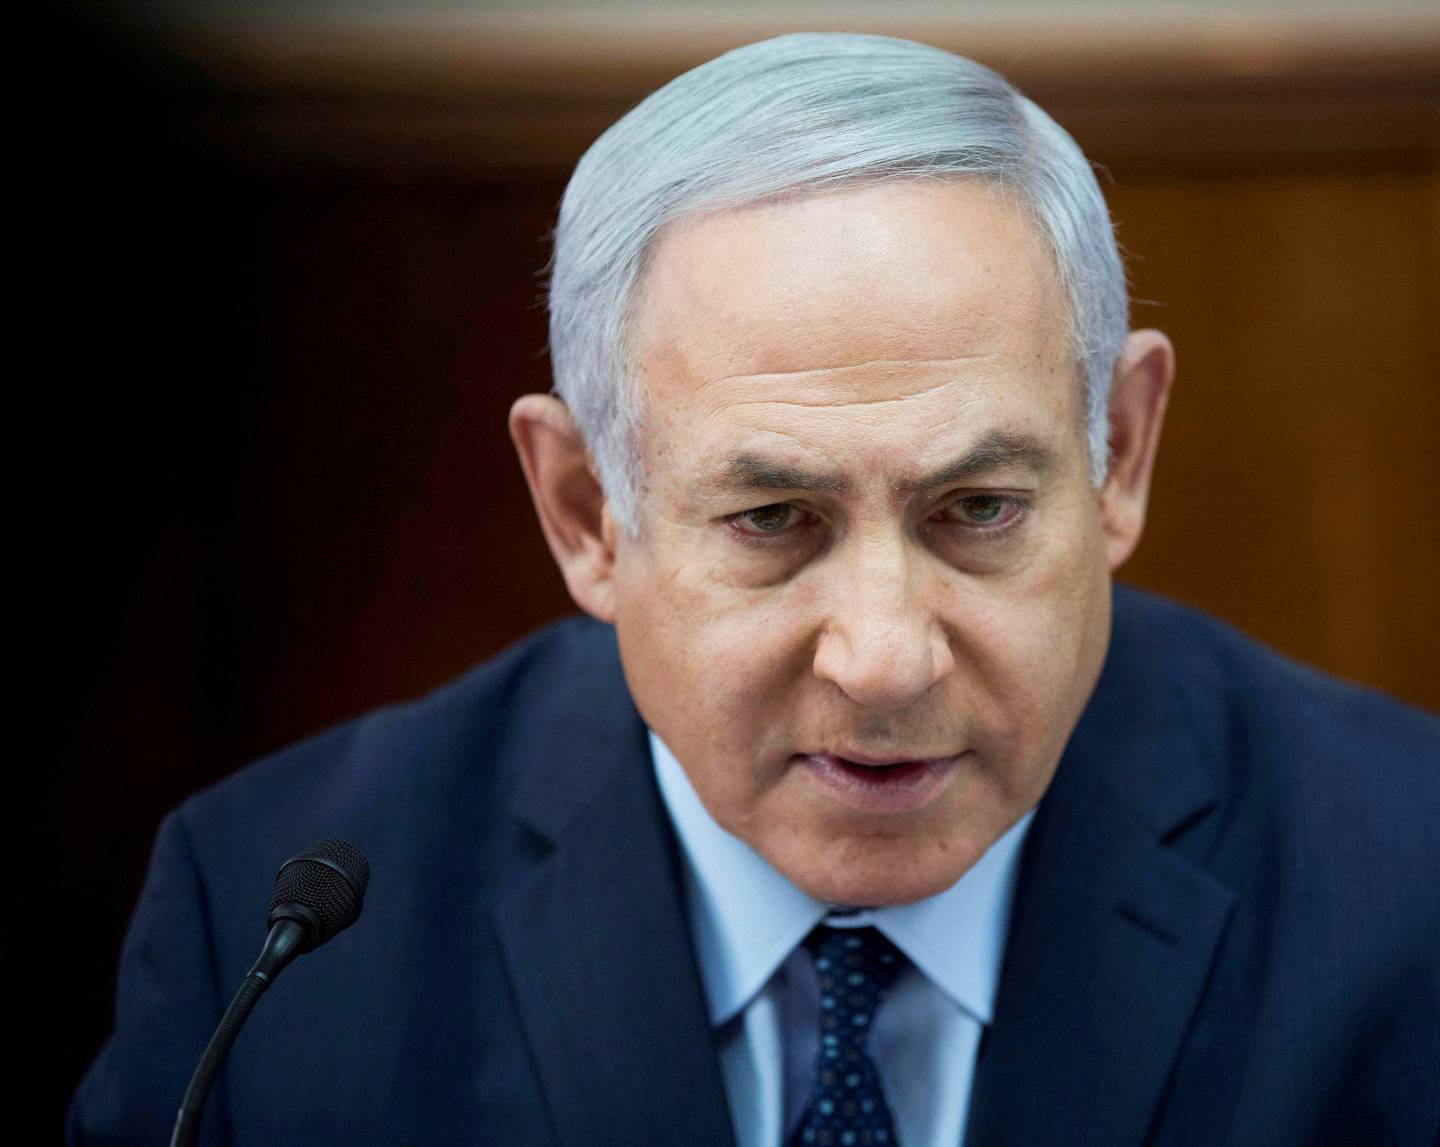 ÅPENT: Tidligere holdt Israel tyst om sine egne angrep, nå er derimot alt «åpent». Her statsminister Benjamin Netanyahu. FOTO: NTB SCANPIX